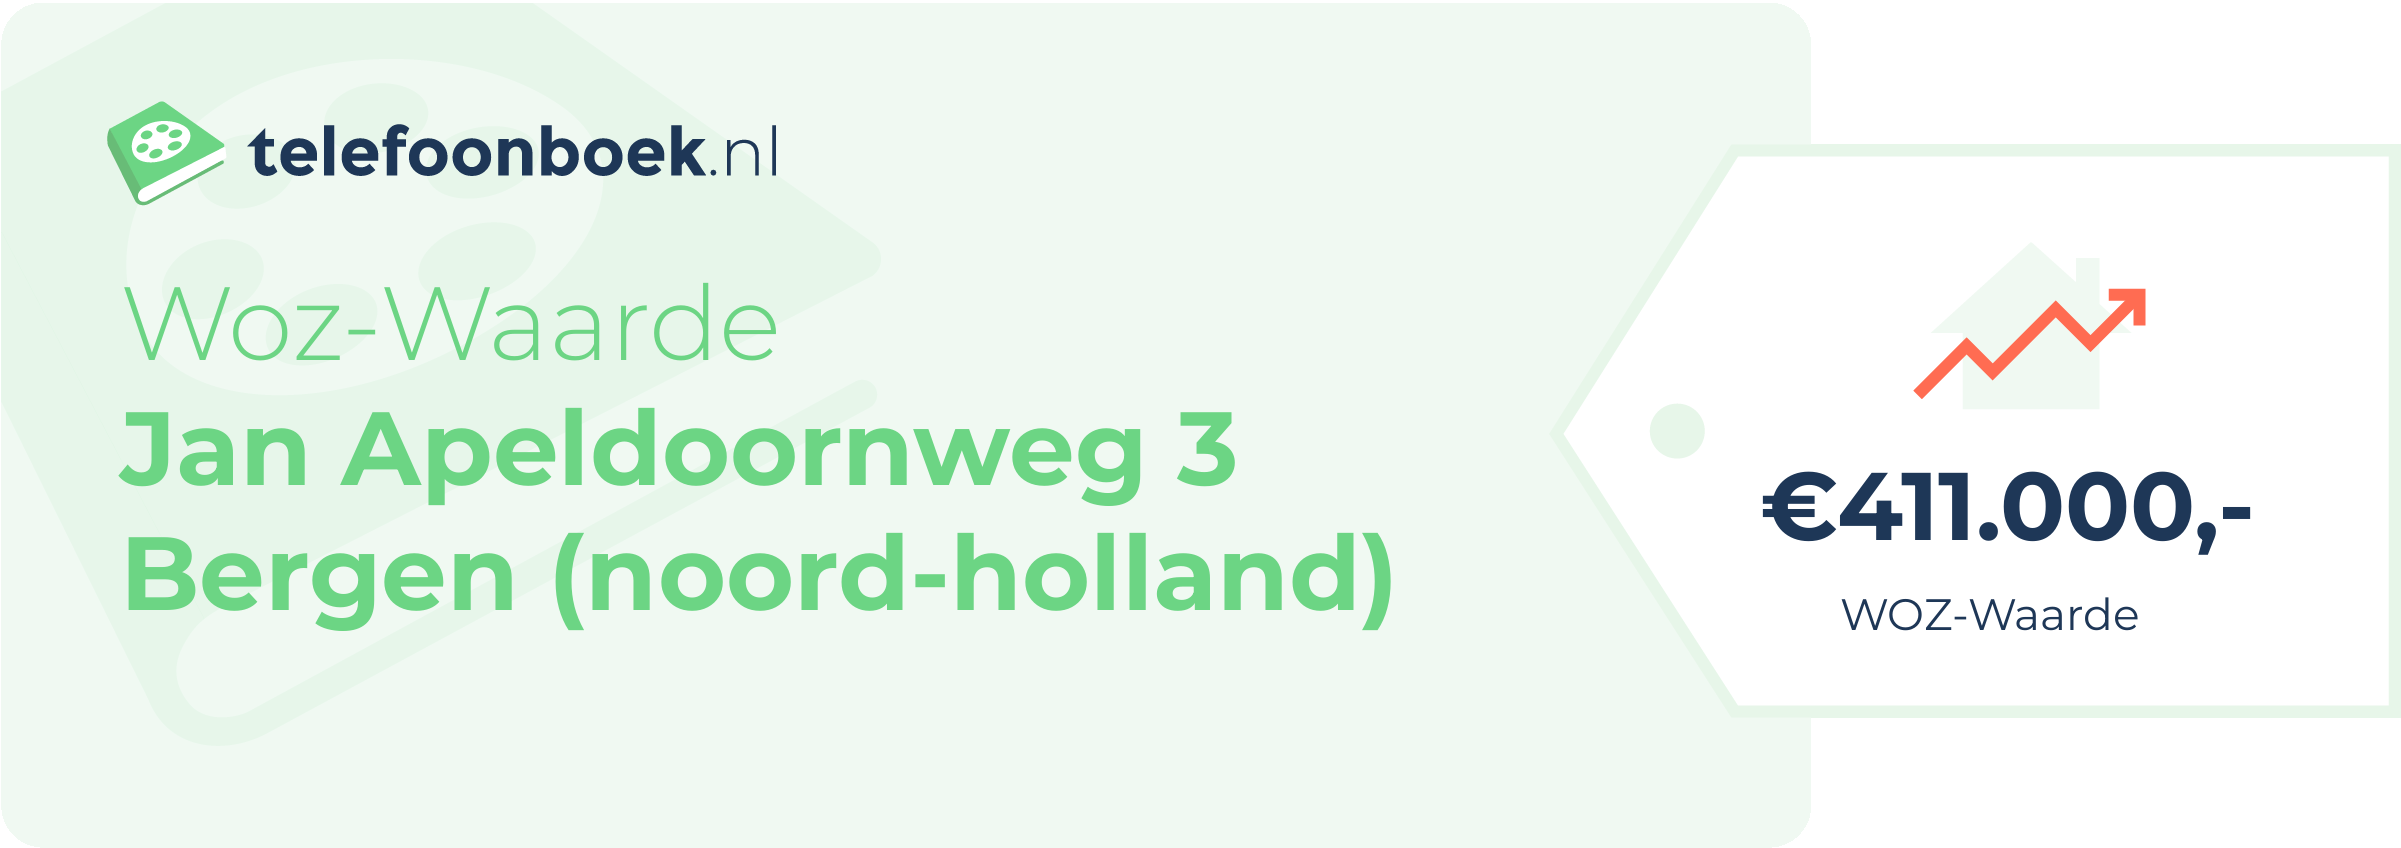 WOZ-waarde Jan Apeldoornweg 3 Bergen (Noord-Holland)